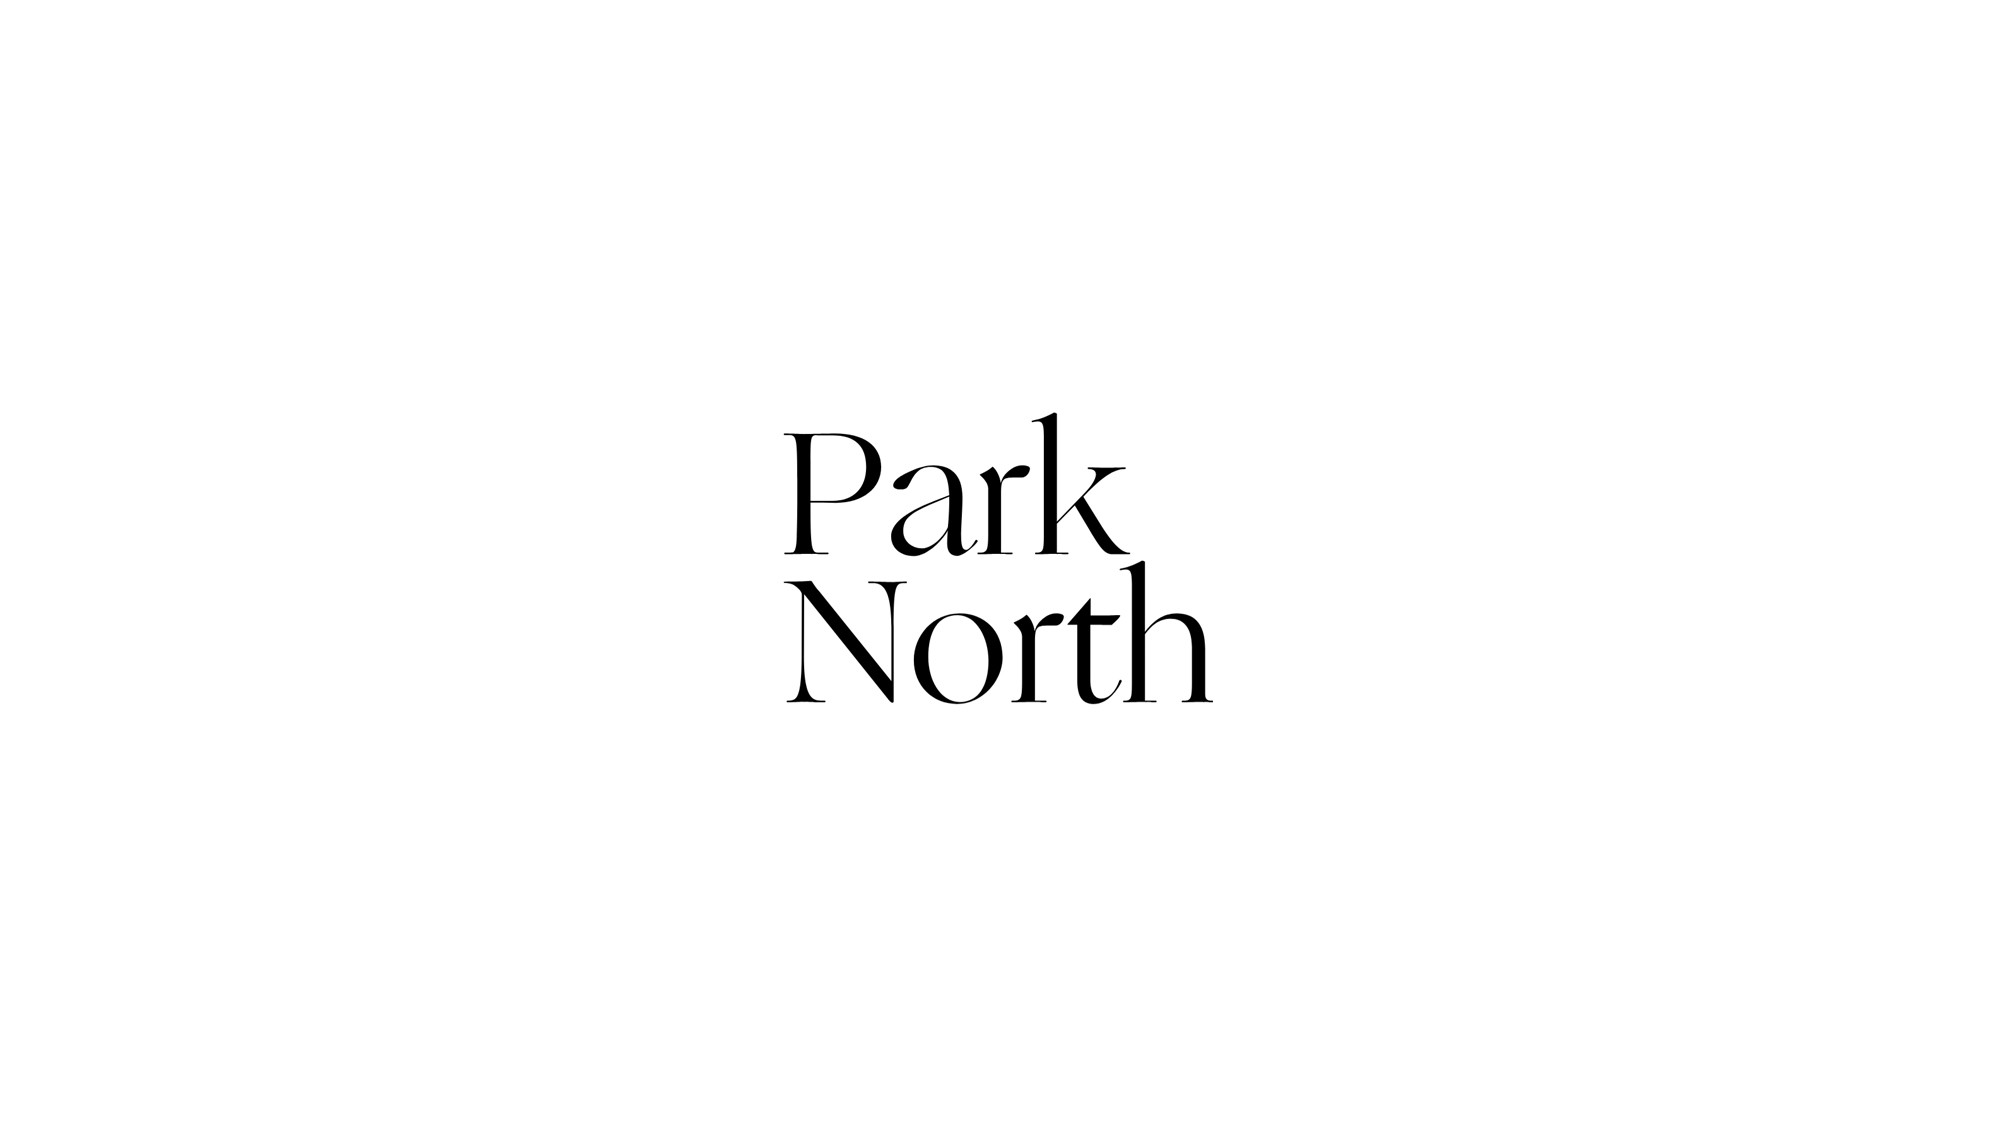 Park North development branding design by CAPRI for Kimbrook Property Developments.